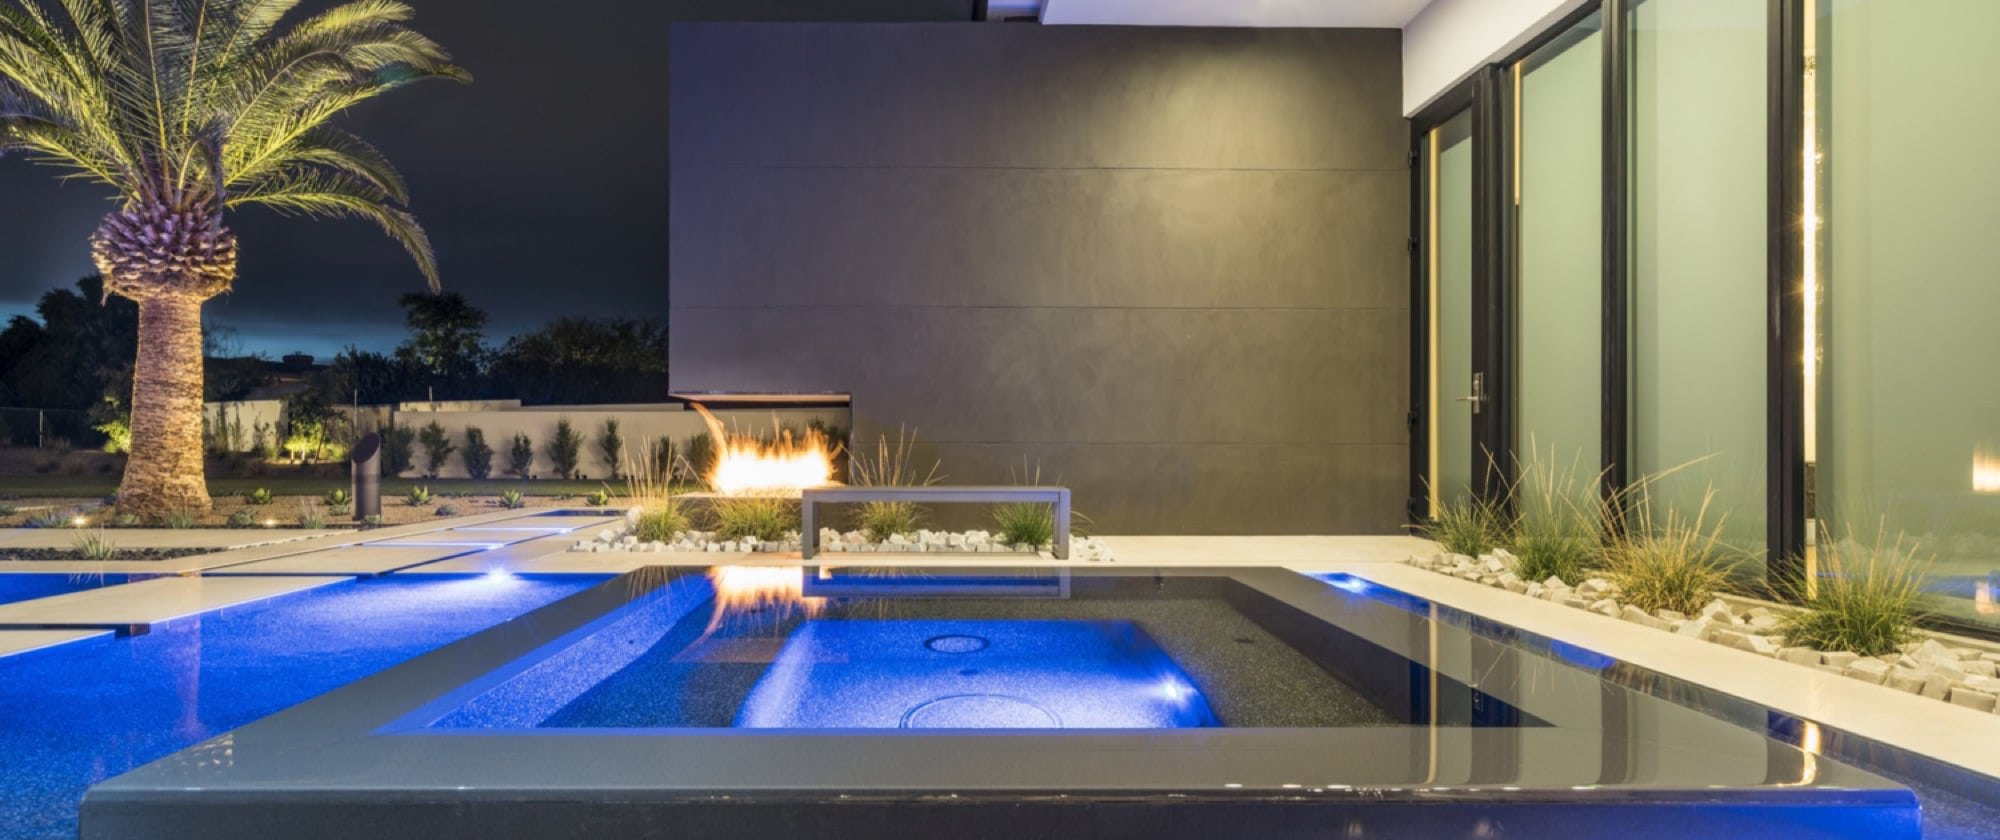 infinity edge pool design custom pool builder arizona premier paradise inc 9 watermarked